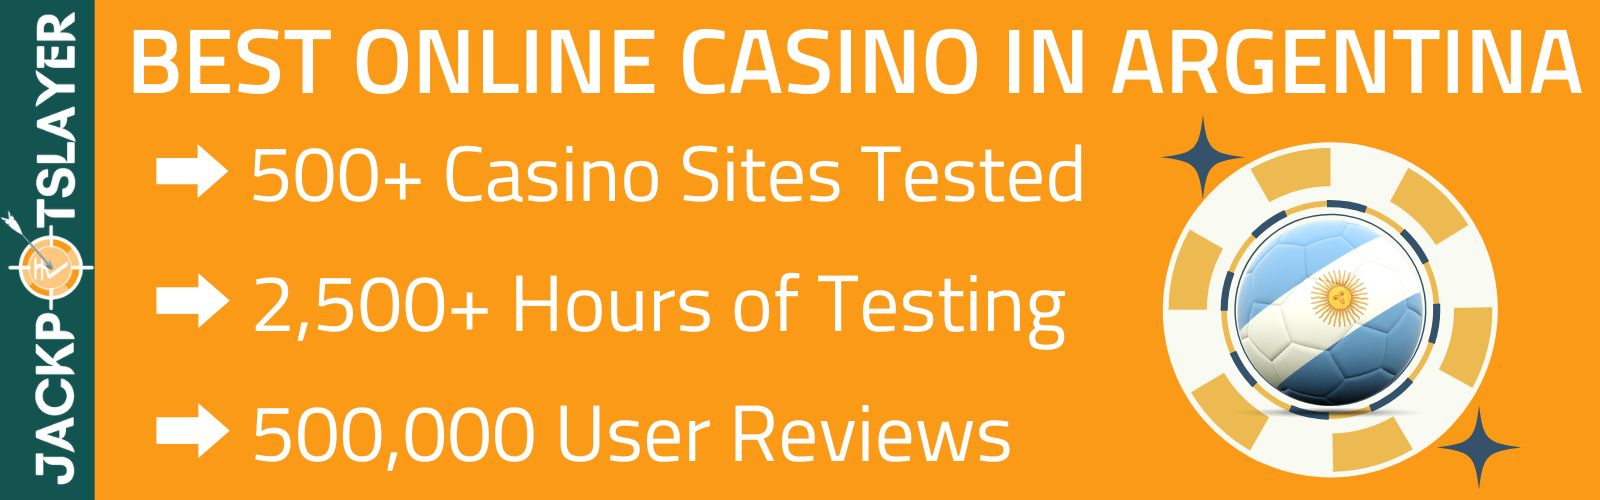 Best online casino in argentina